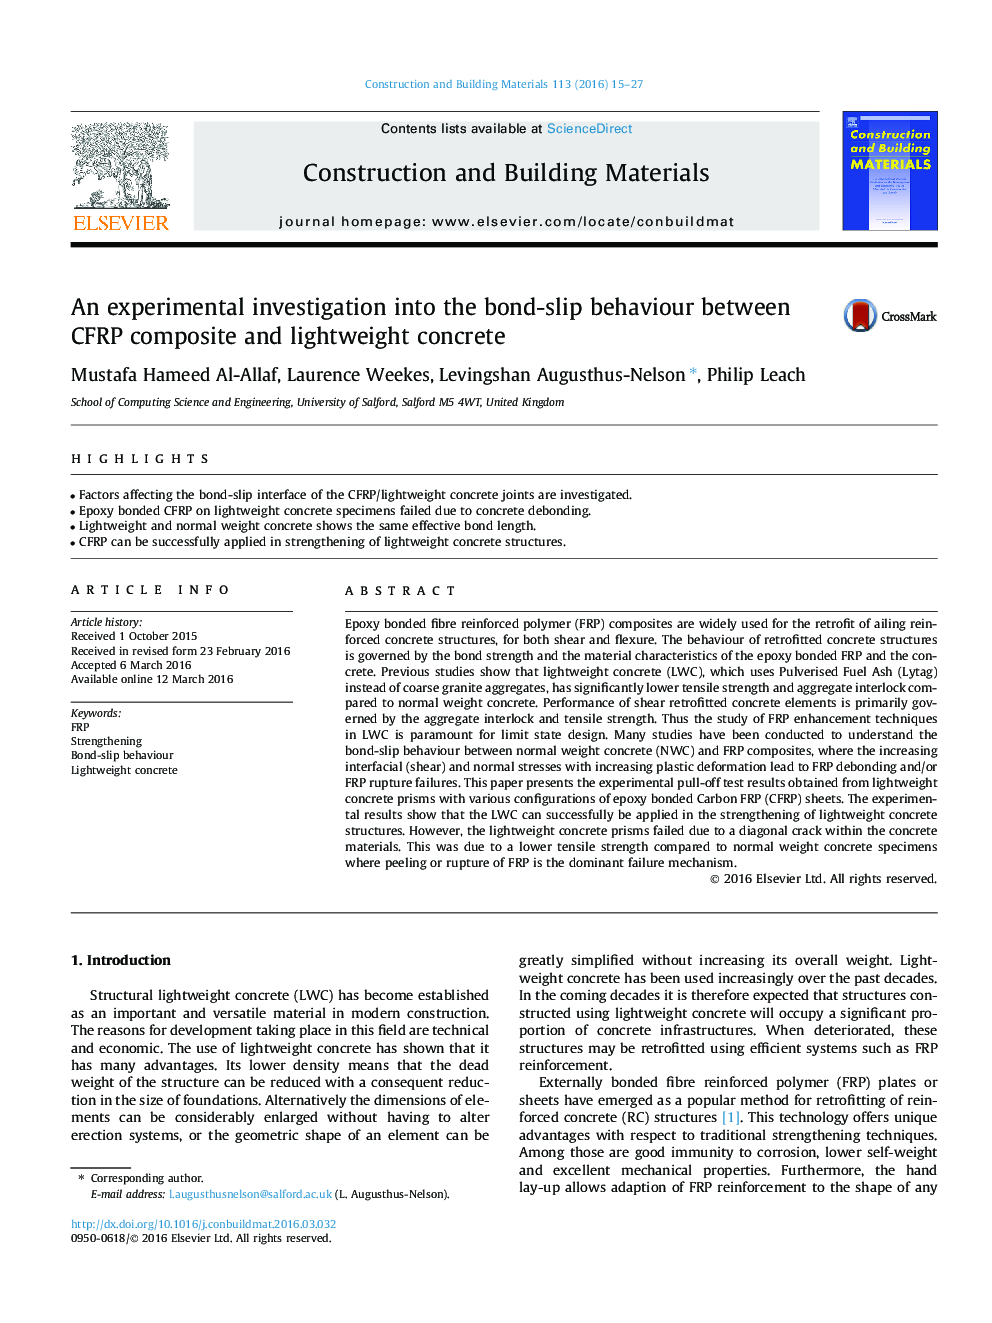 An experimental investigation into the bond-slip behaviour between CFRP composite and lightweight concrete